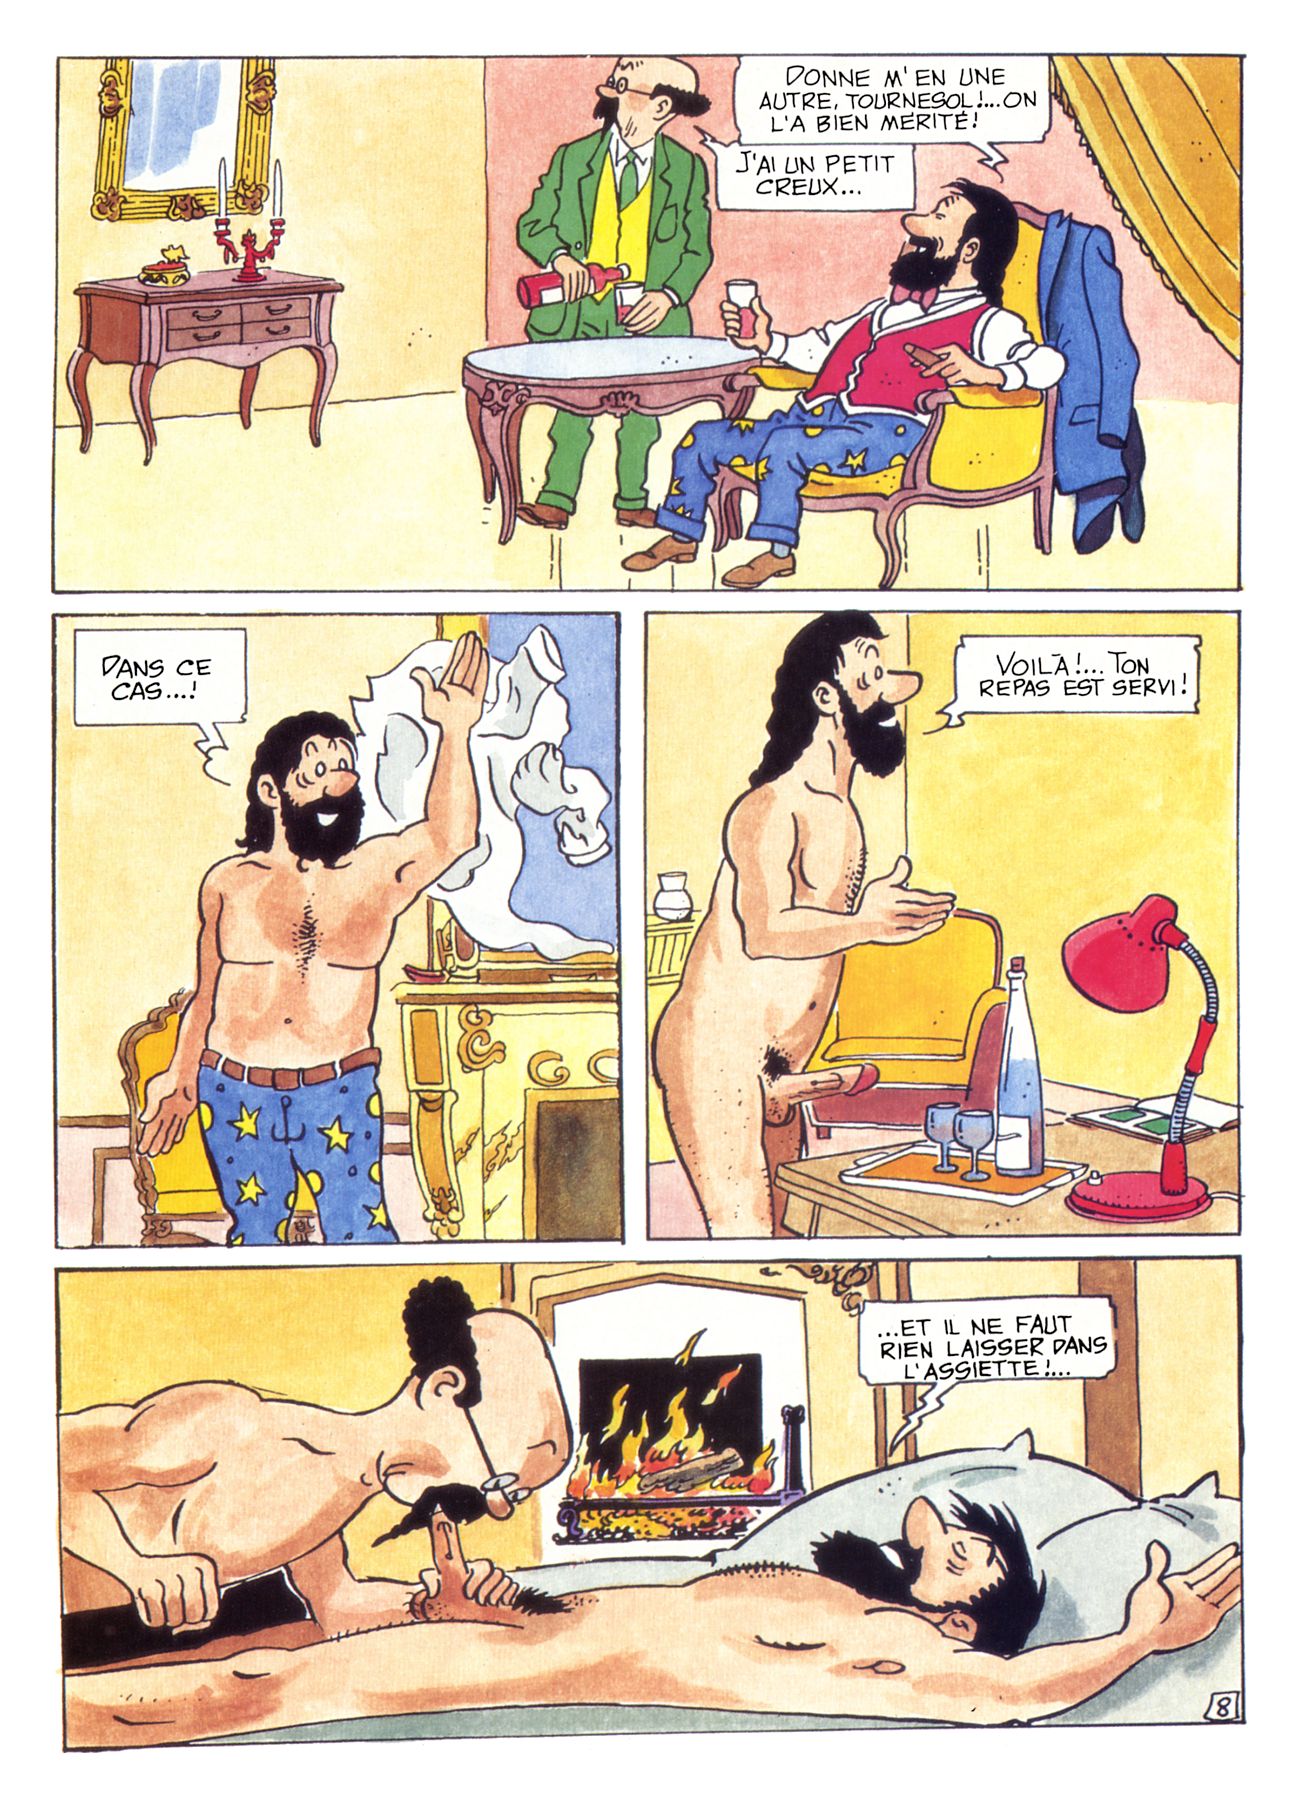 La-Vie-Sexuelle-De-Tintin-1992-All-64-pages-French-page08--Gotofap.tk--36817258.jpg